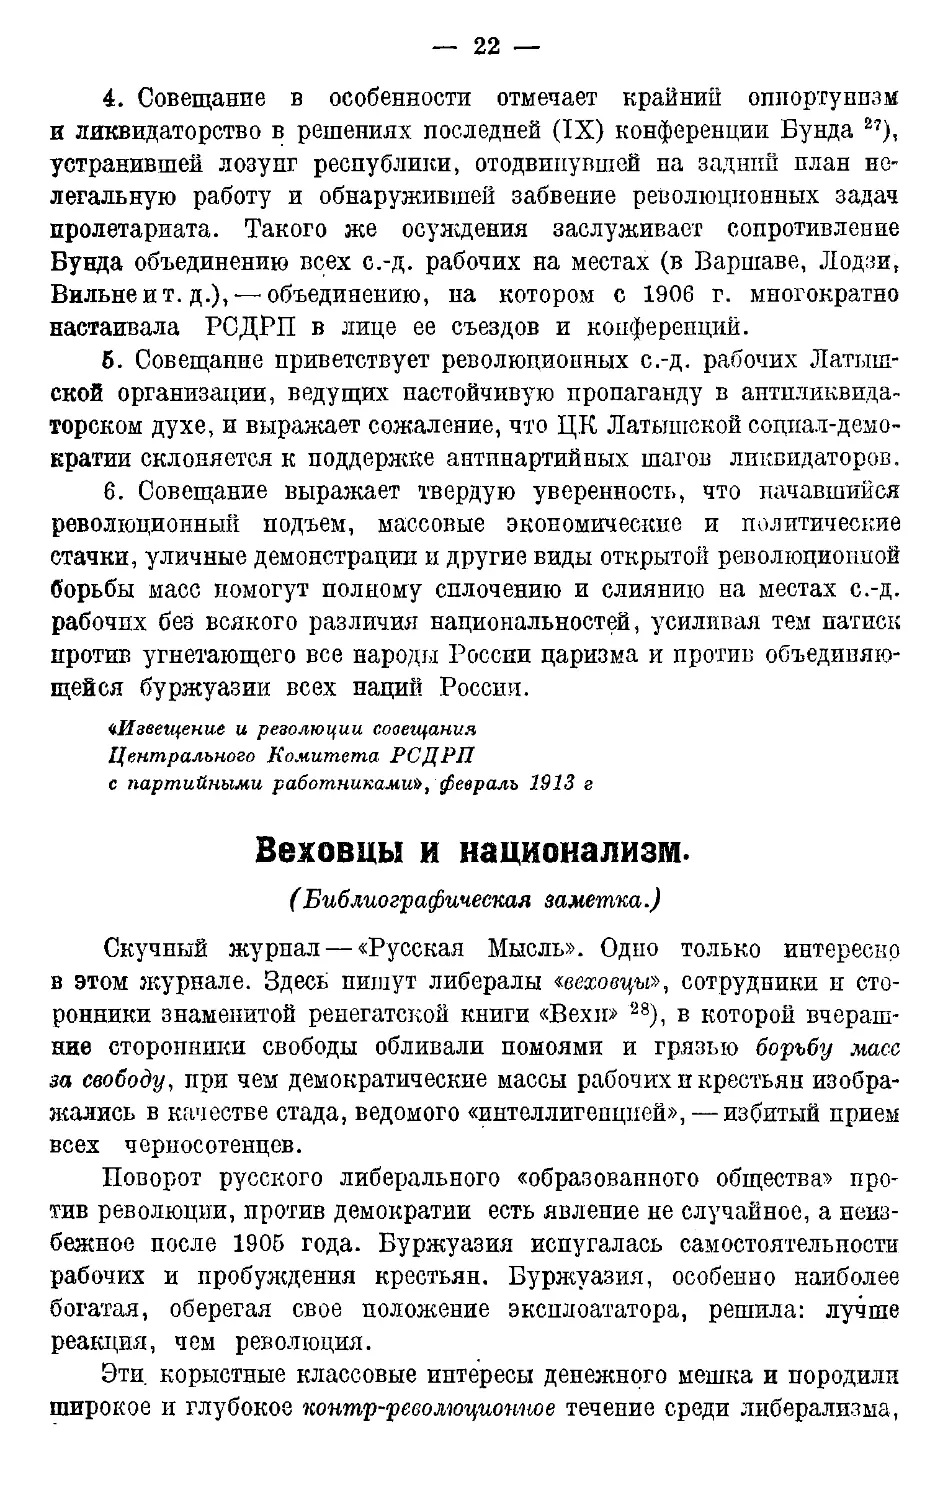 1913 г.
Веховцы и национализм.